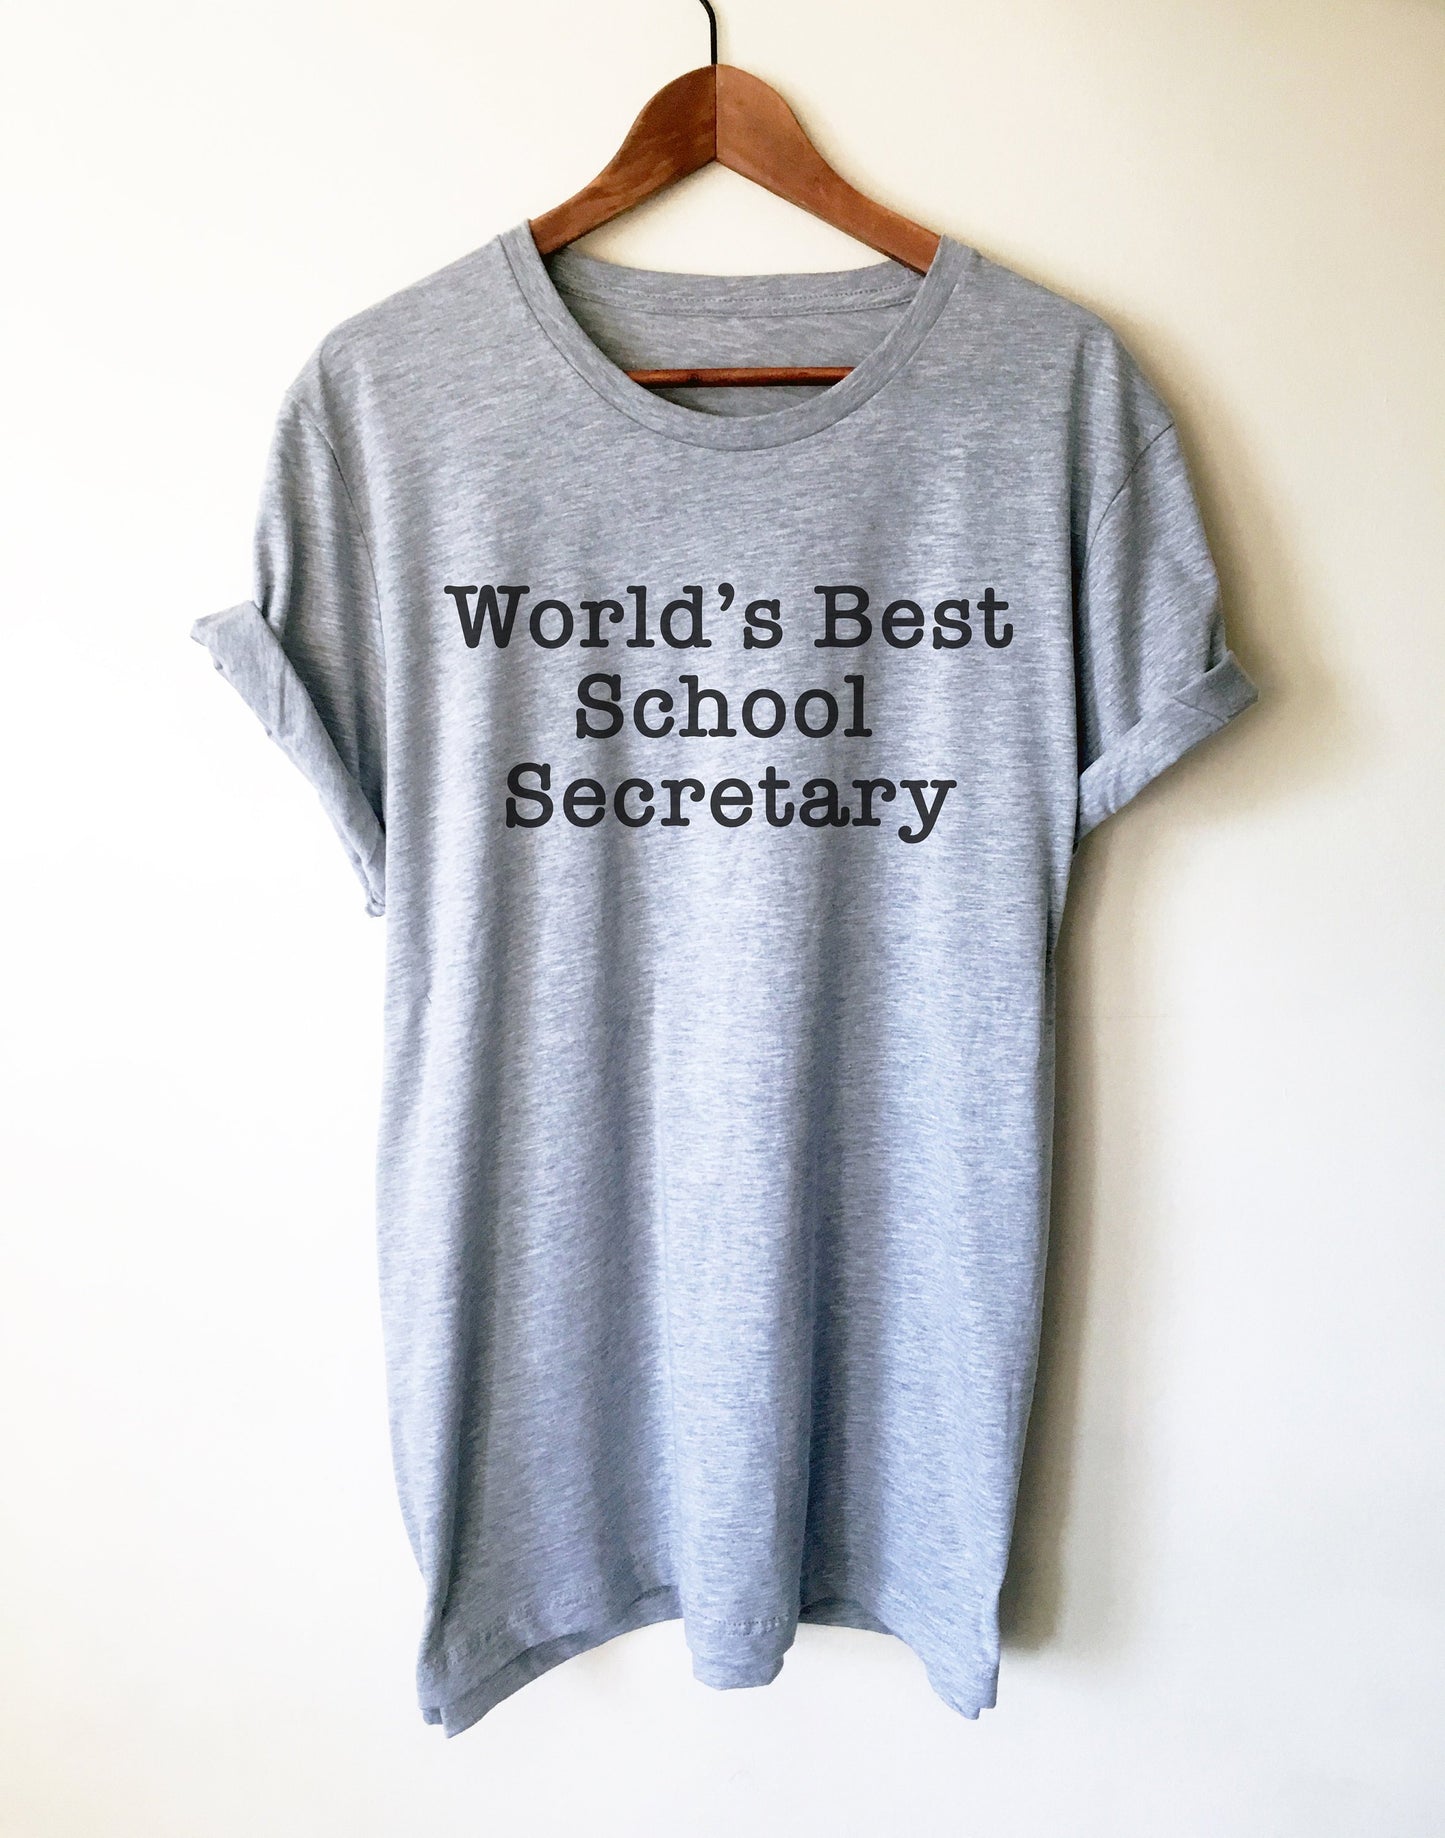 World’s Best School Secretary Unisex Shirt - School Secretary Shirt, School Secretary Gift, Secretary Shirt, End Of School Gift